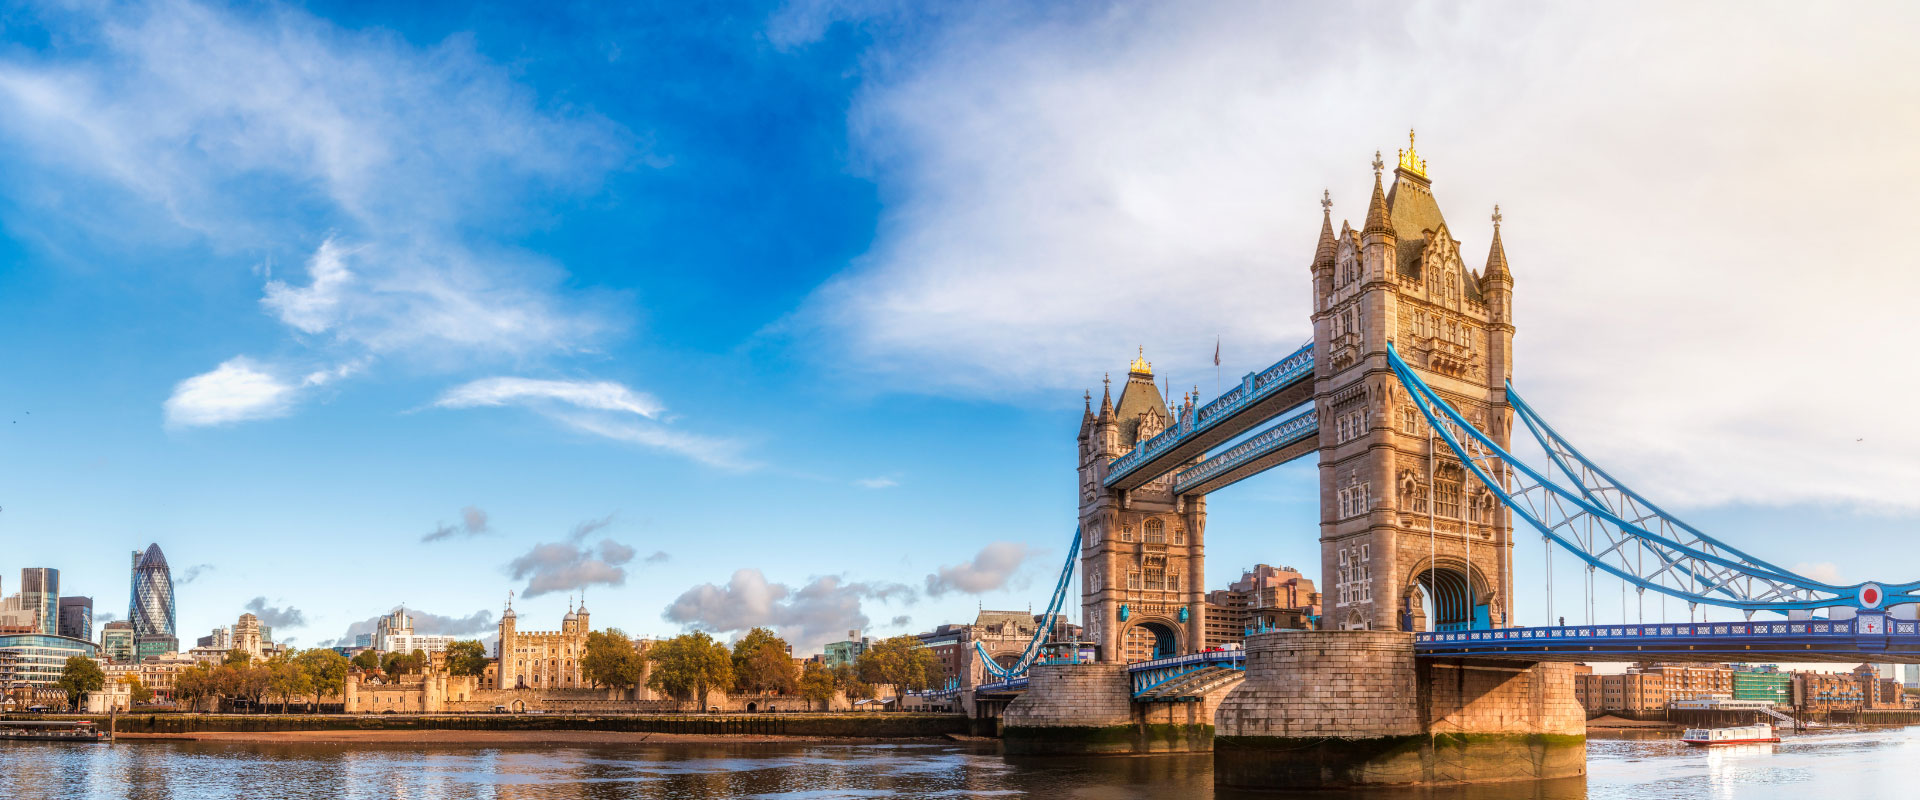 Tower Bridge - Wochenende in London